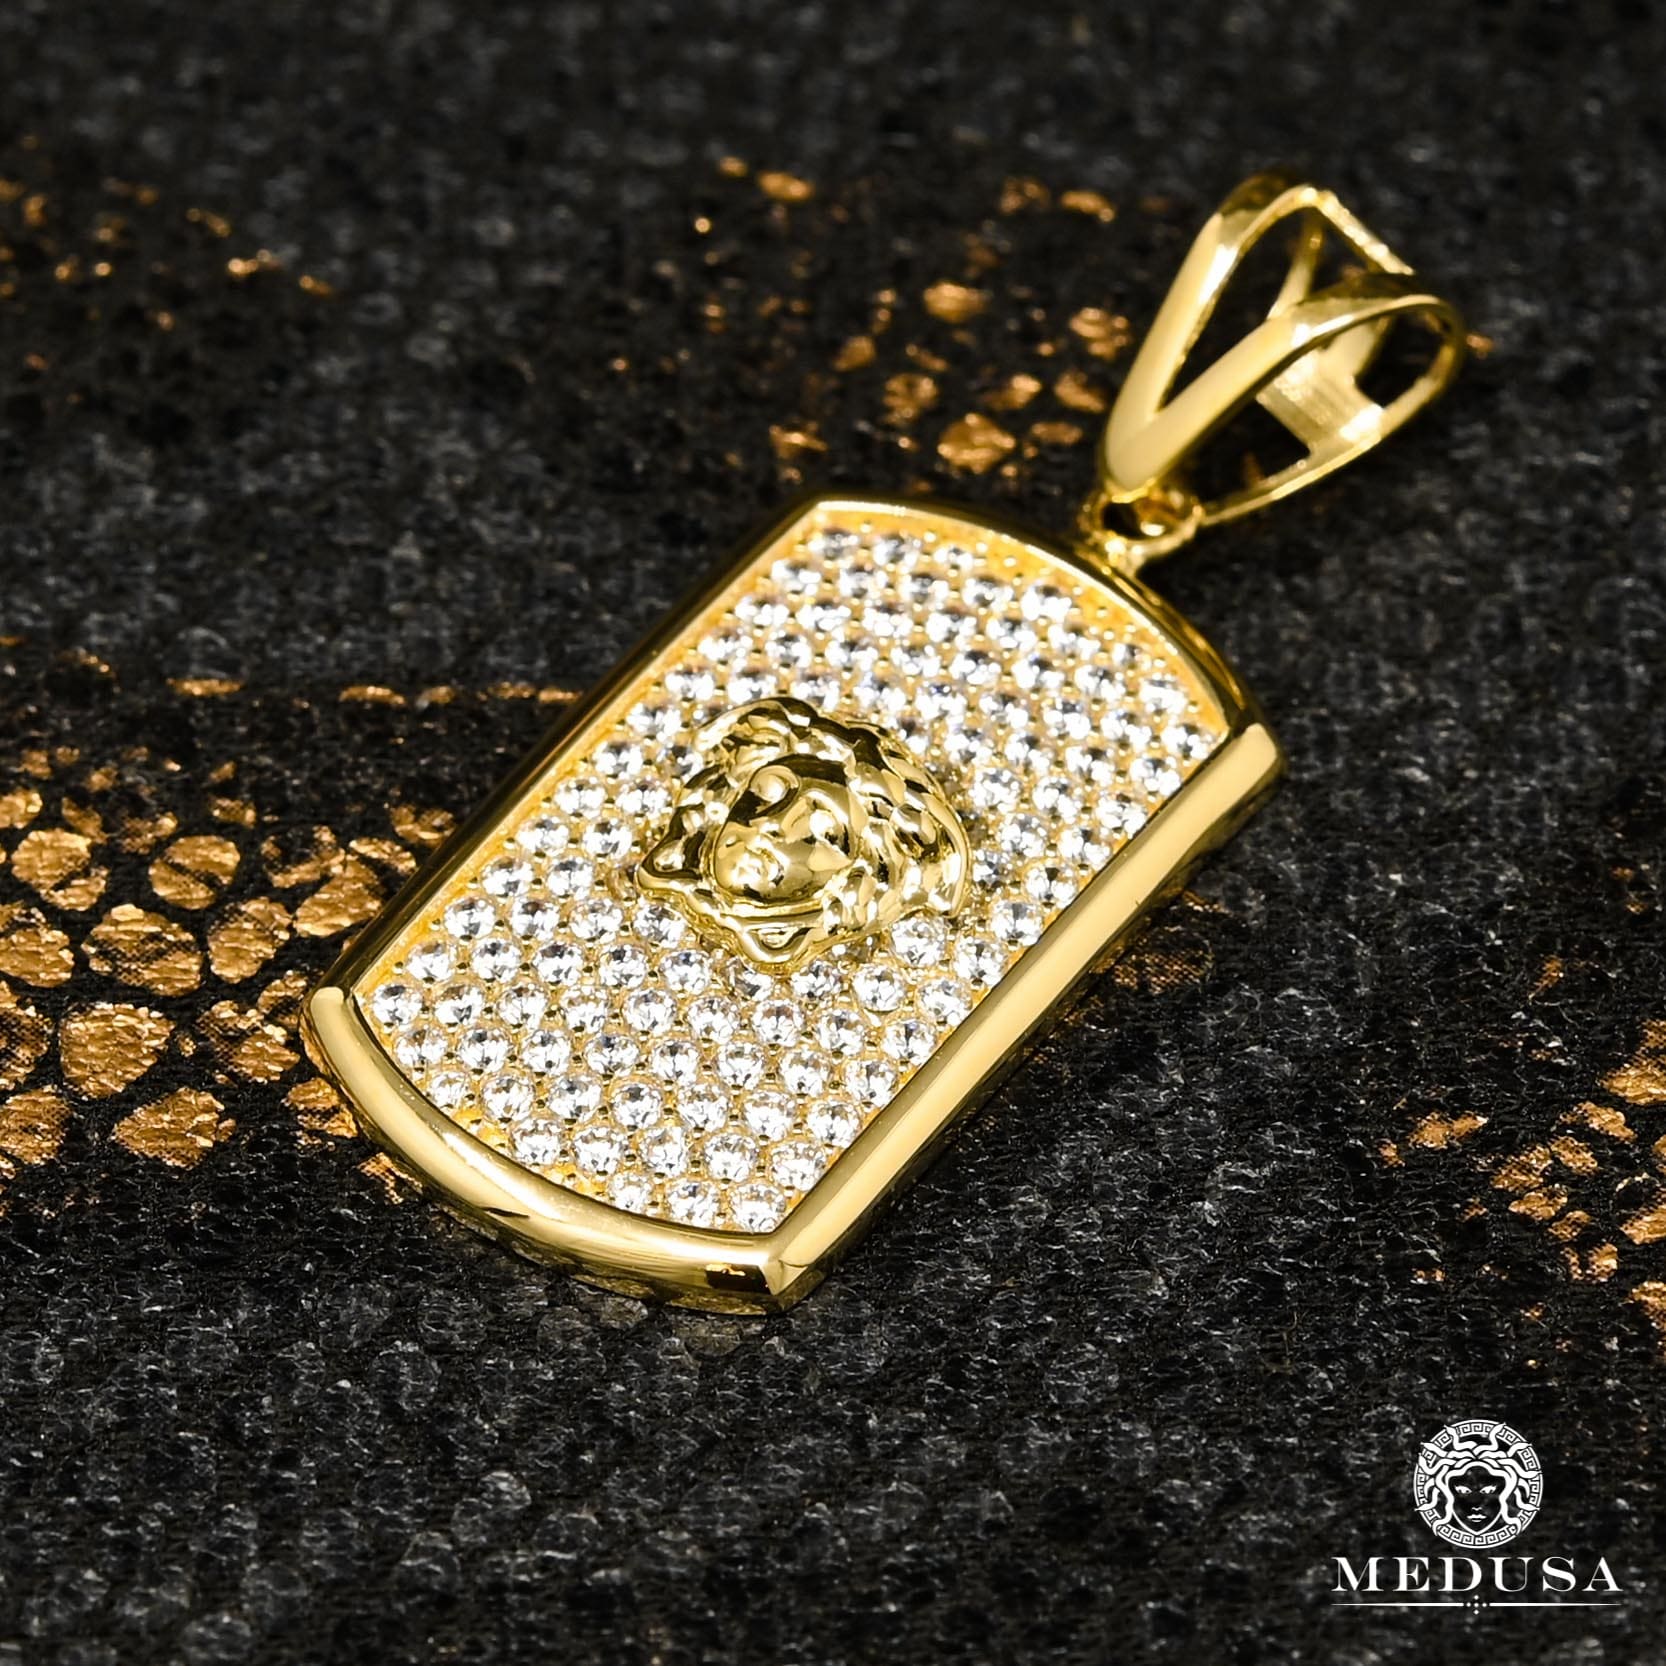 10K Gold Pendant | Medallion Shield X32 Gold 2 Tones